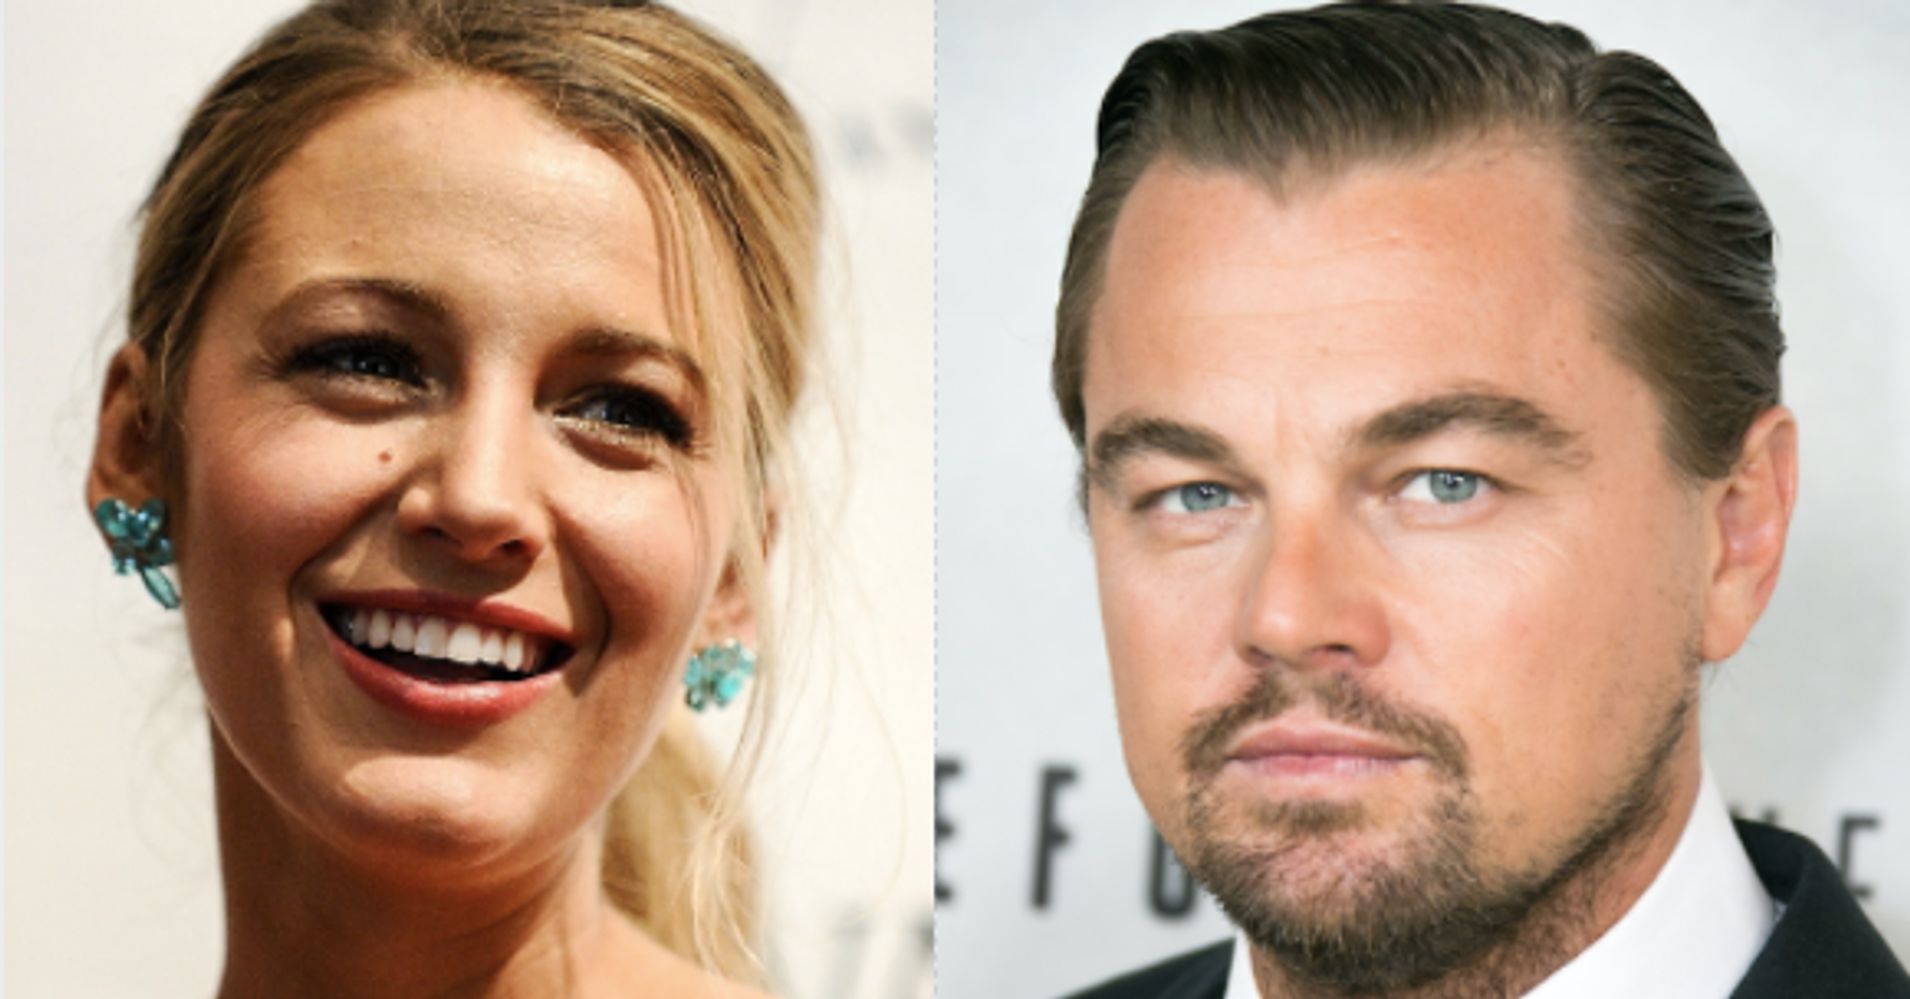 Blake Lively Used To Send Ex-Boyfriend Leonardo DiCaprio Photos Of Dolls | HuffPost